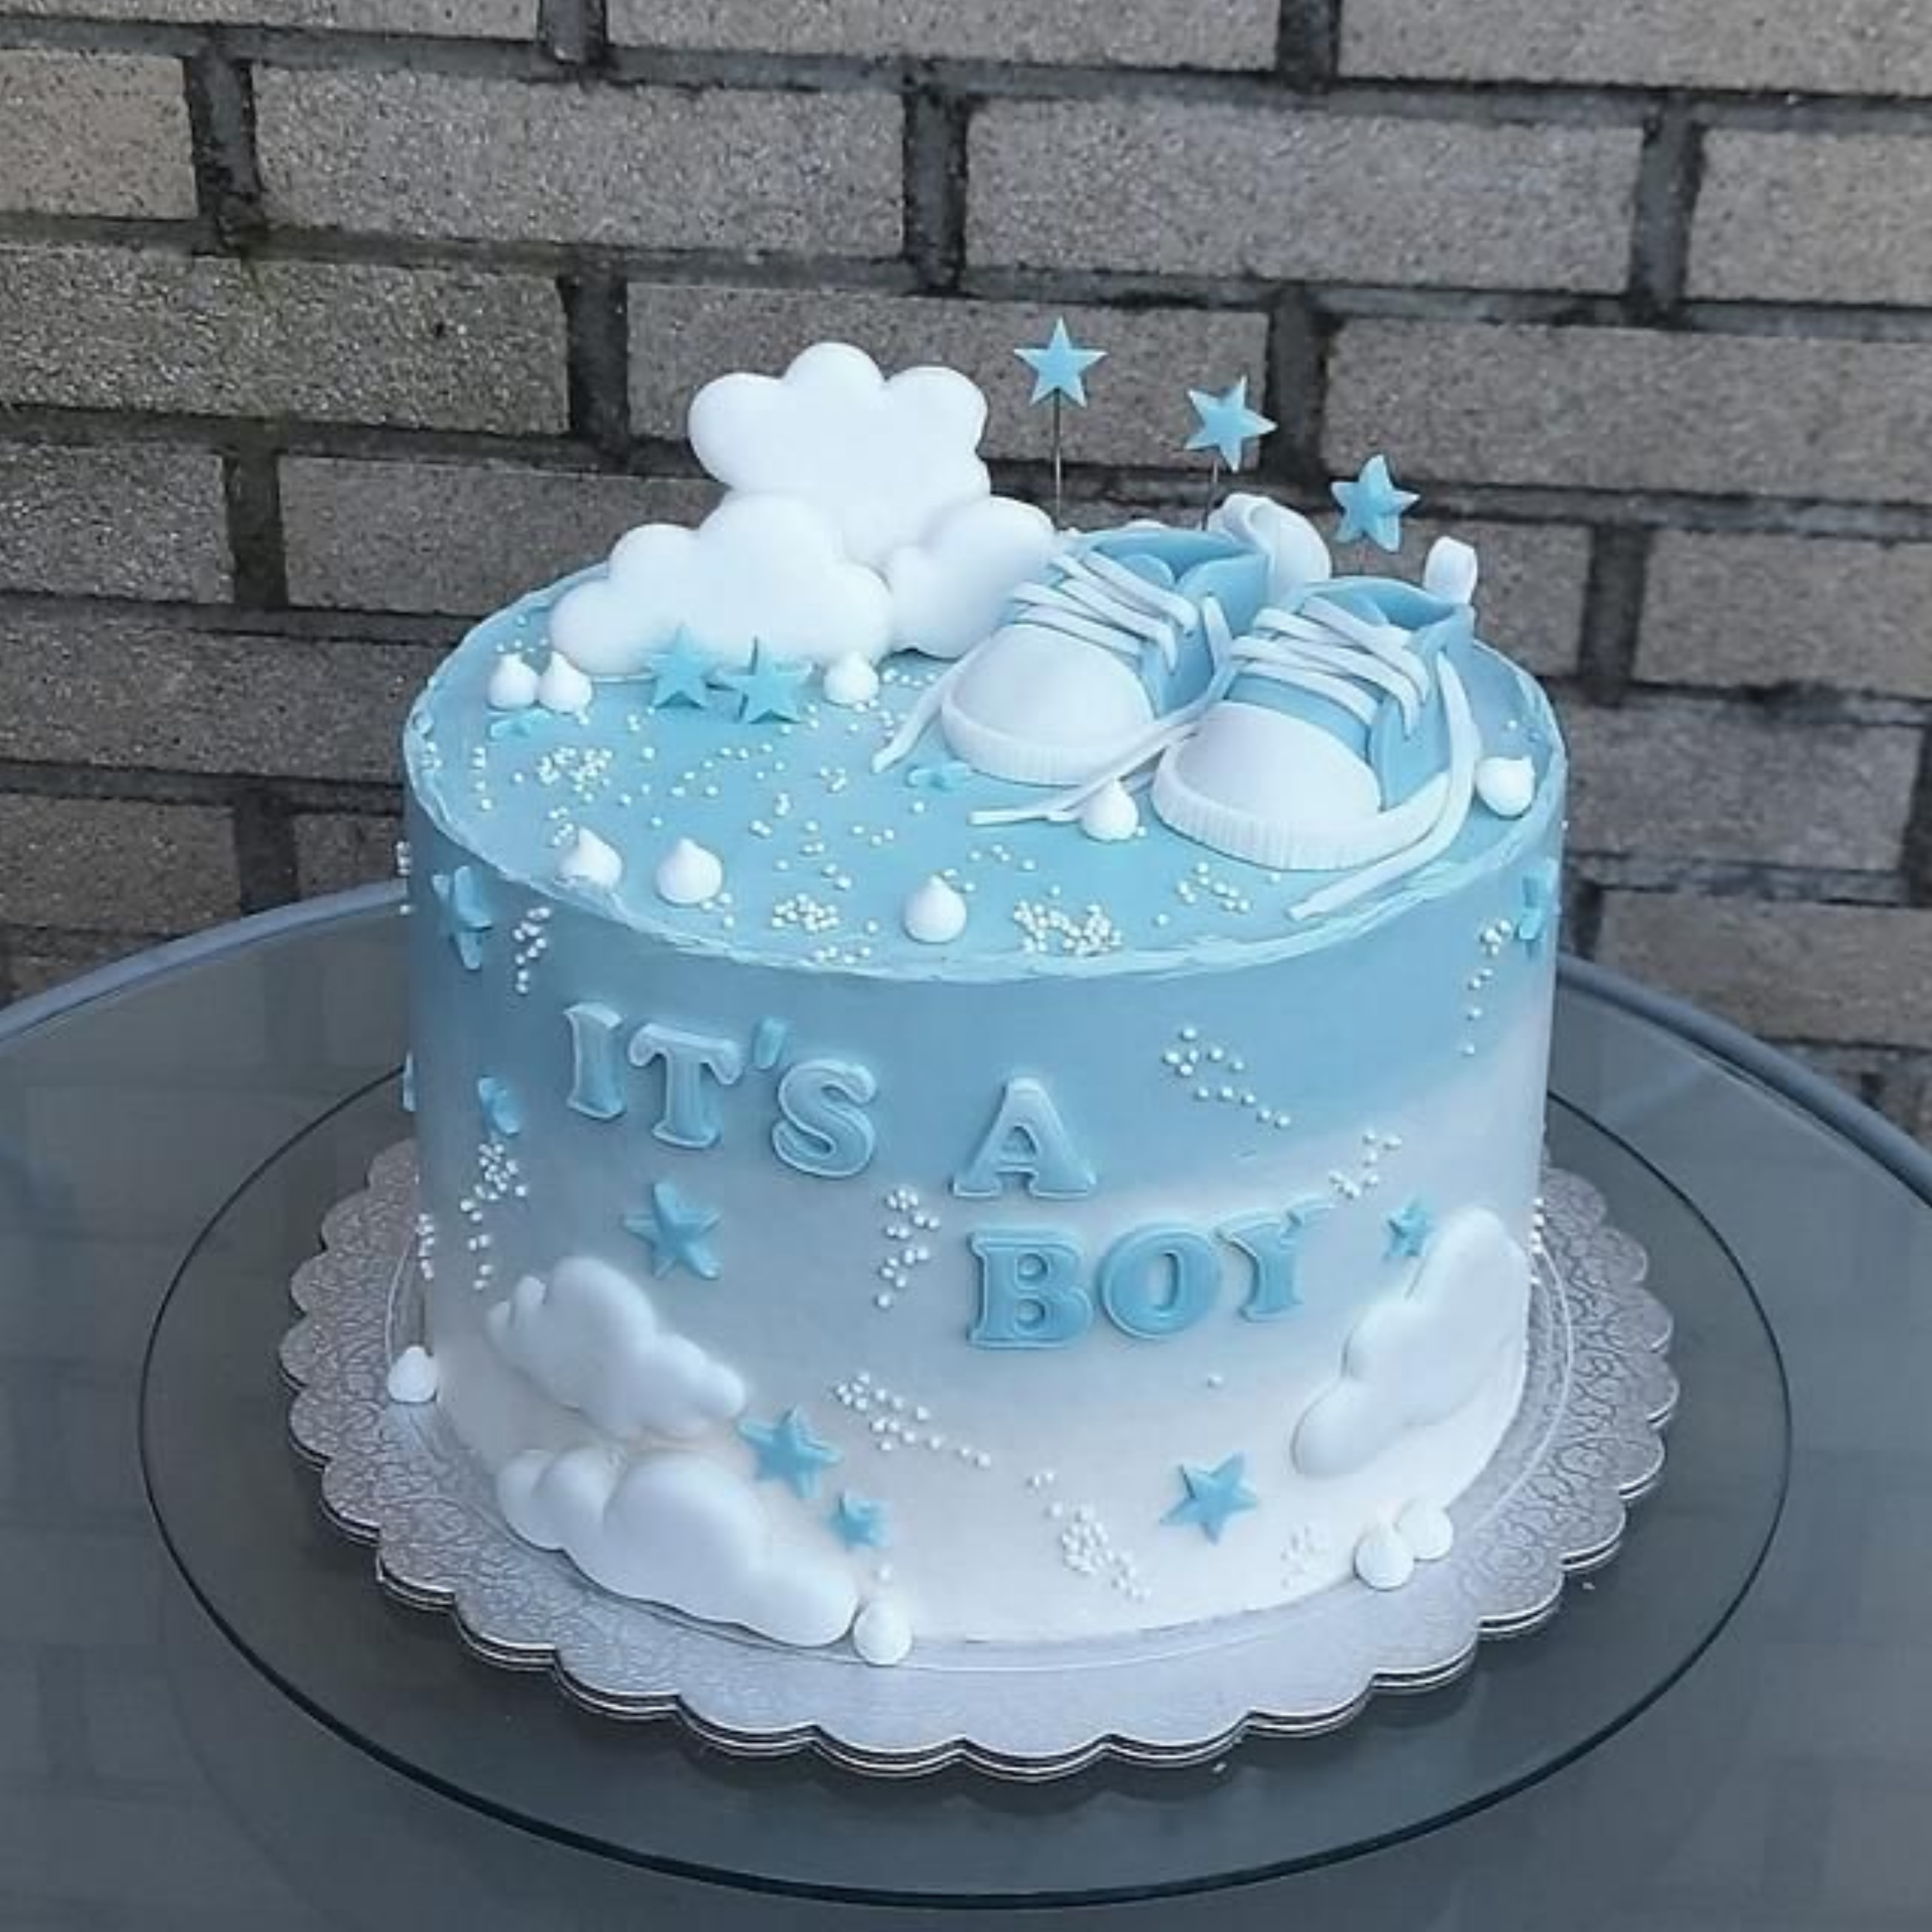 children's birthday cakes | Toast & Butter-sgquangbinhtourist.com.vn